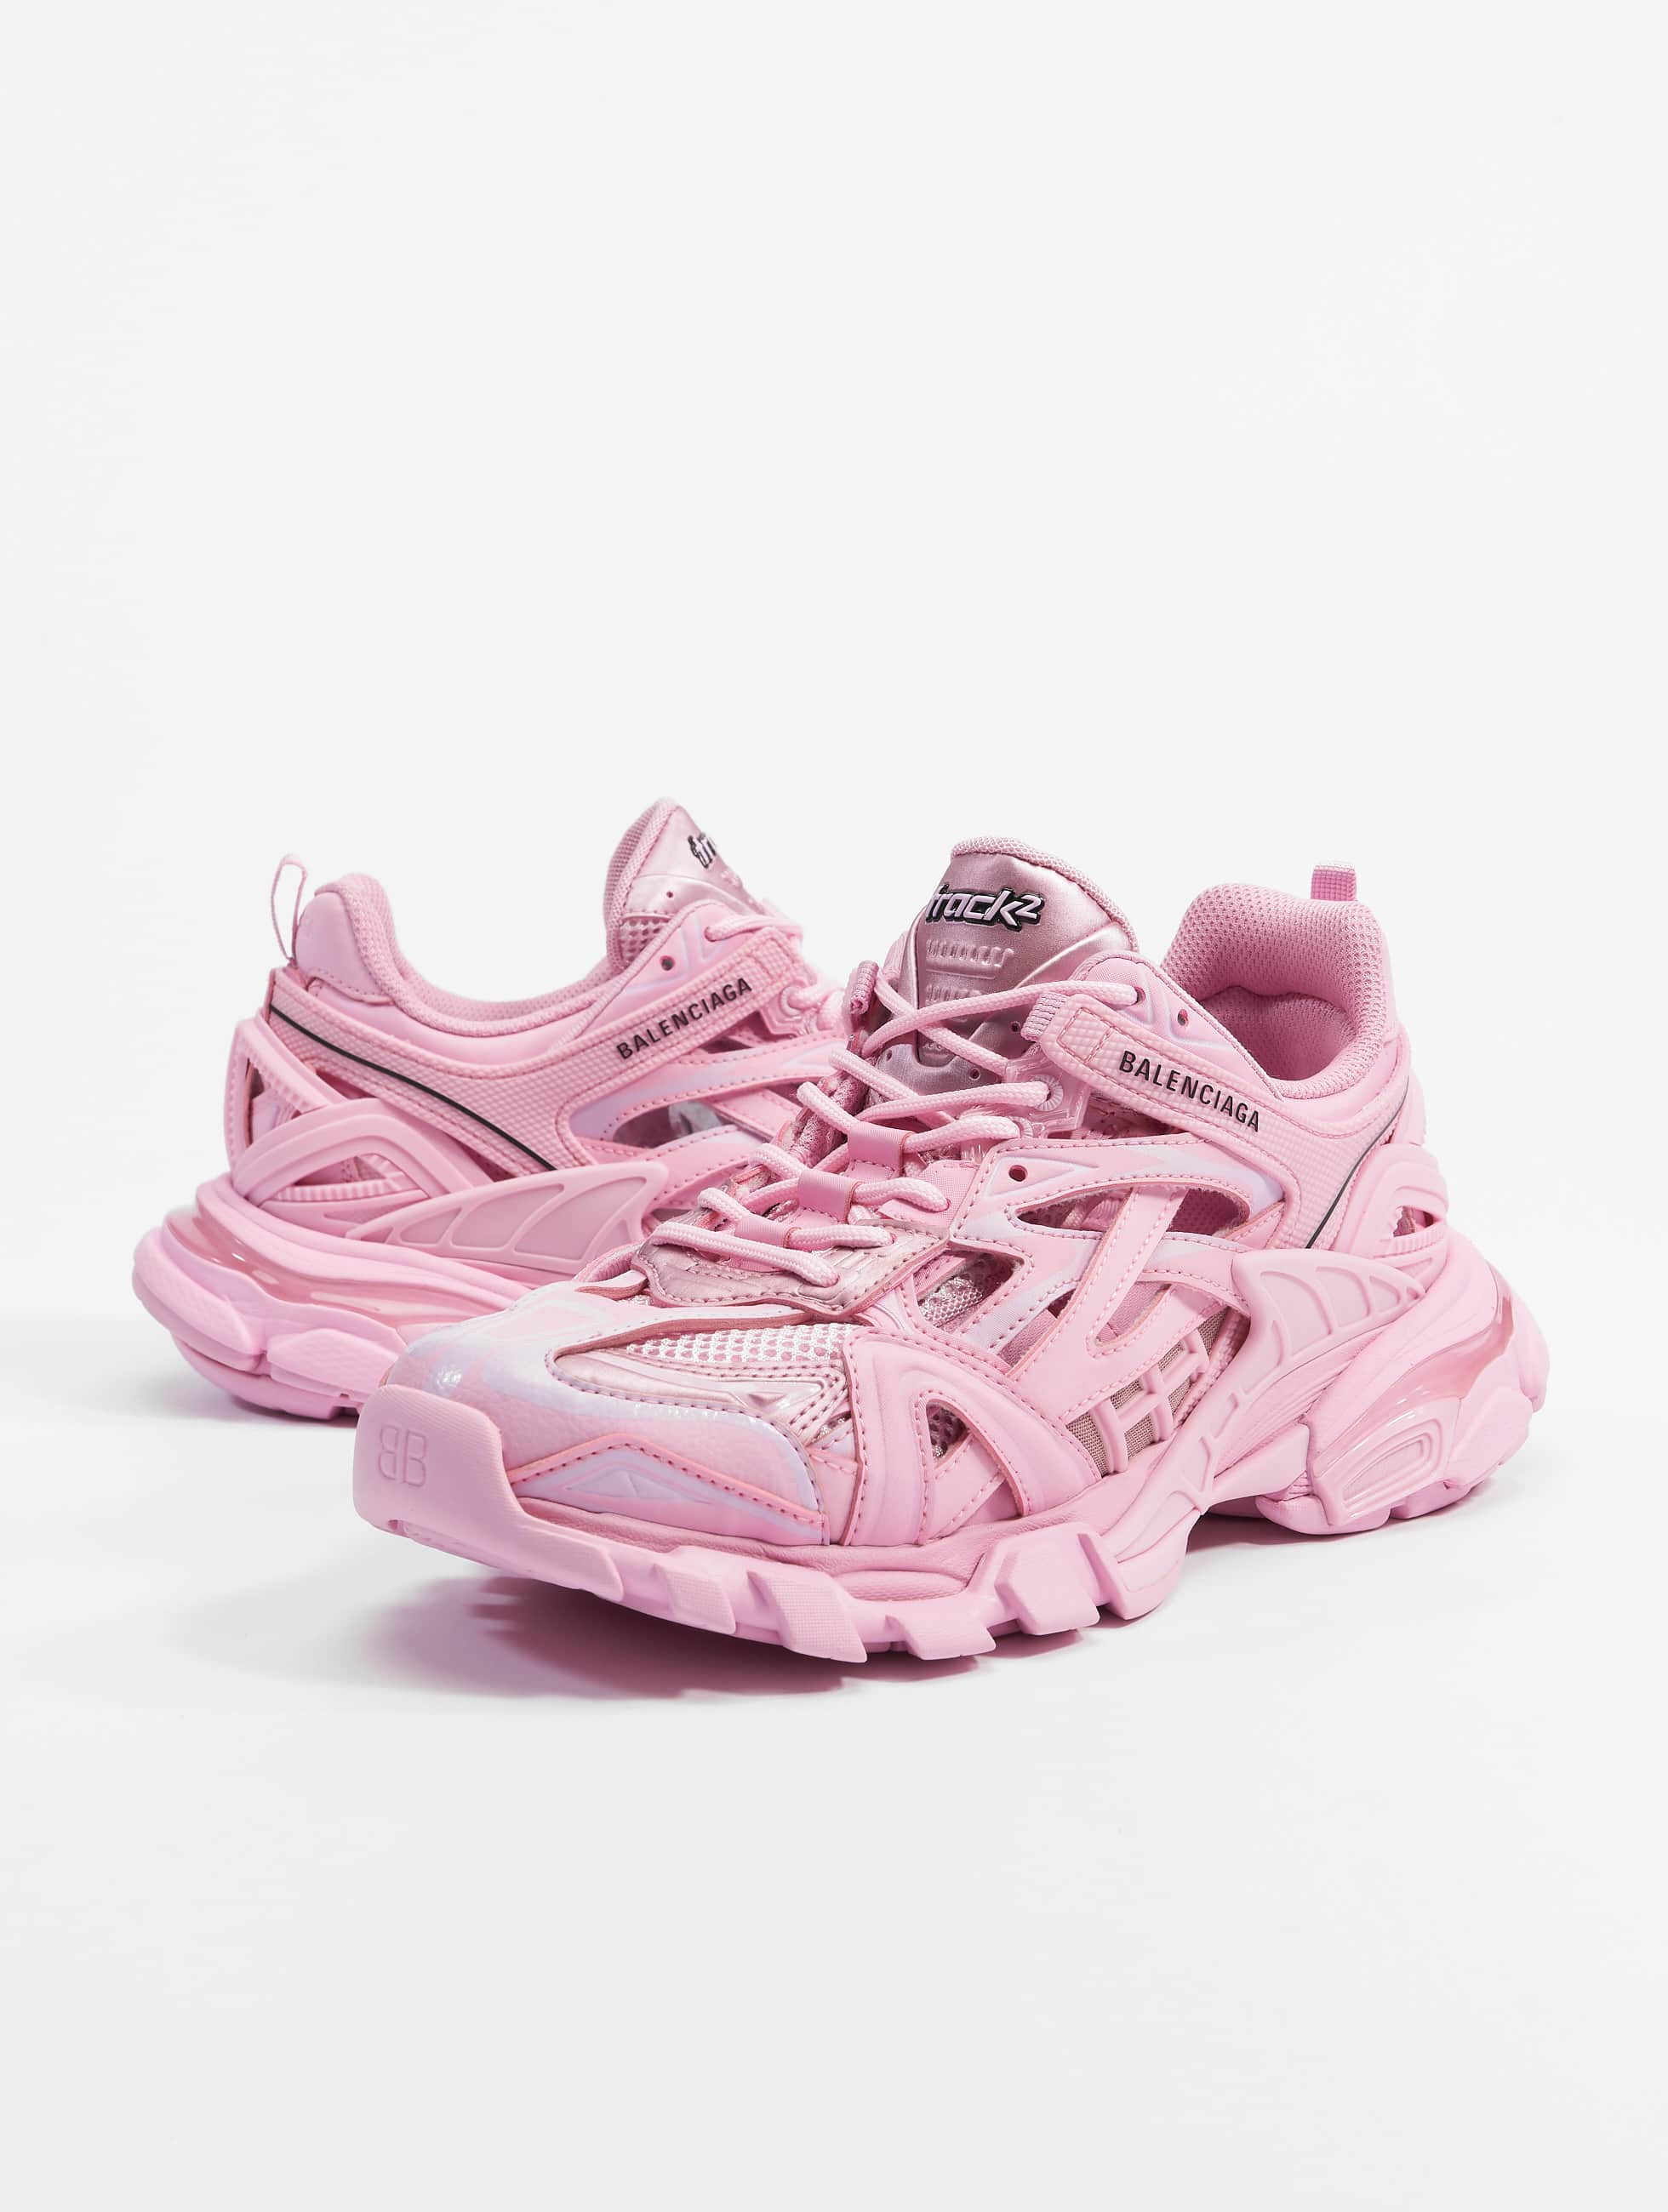 aspect lettergreep Beweegt niet Balenciaga schoen / sneaker TRACK.2 in pink 909795